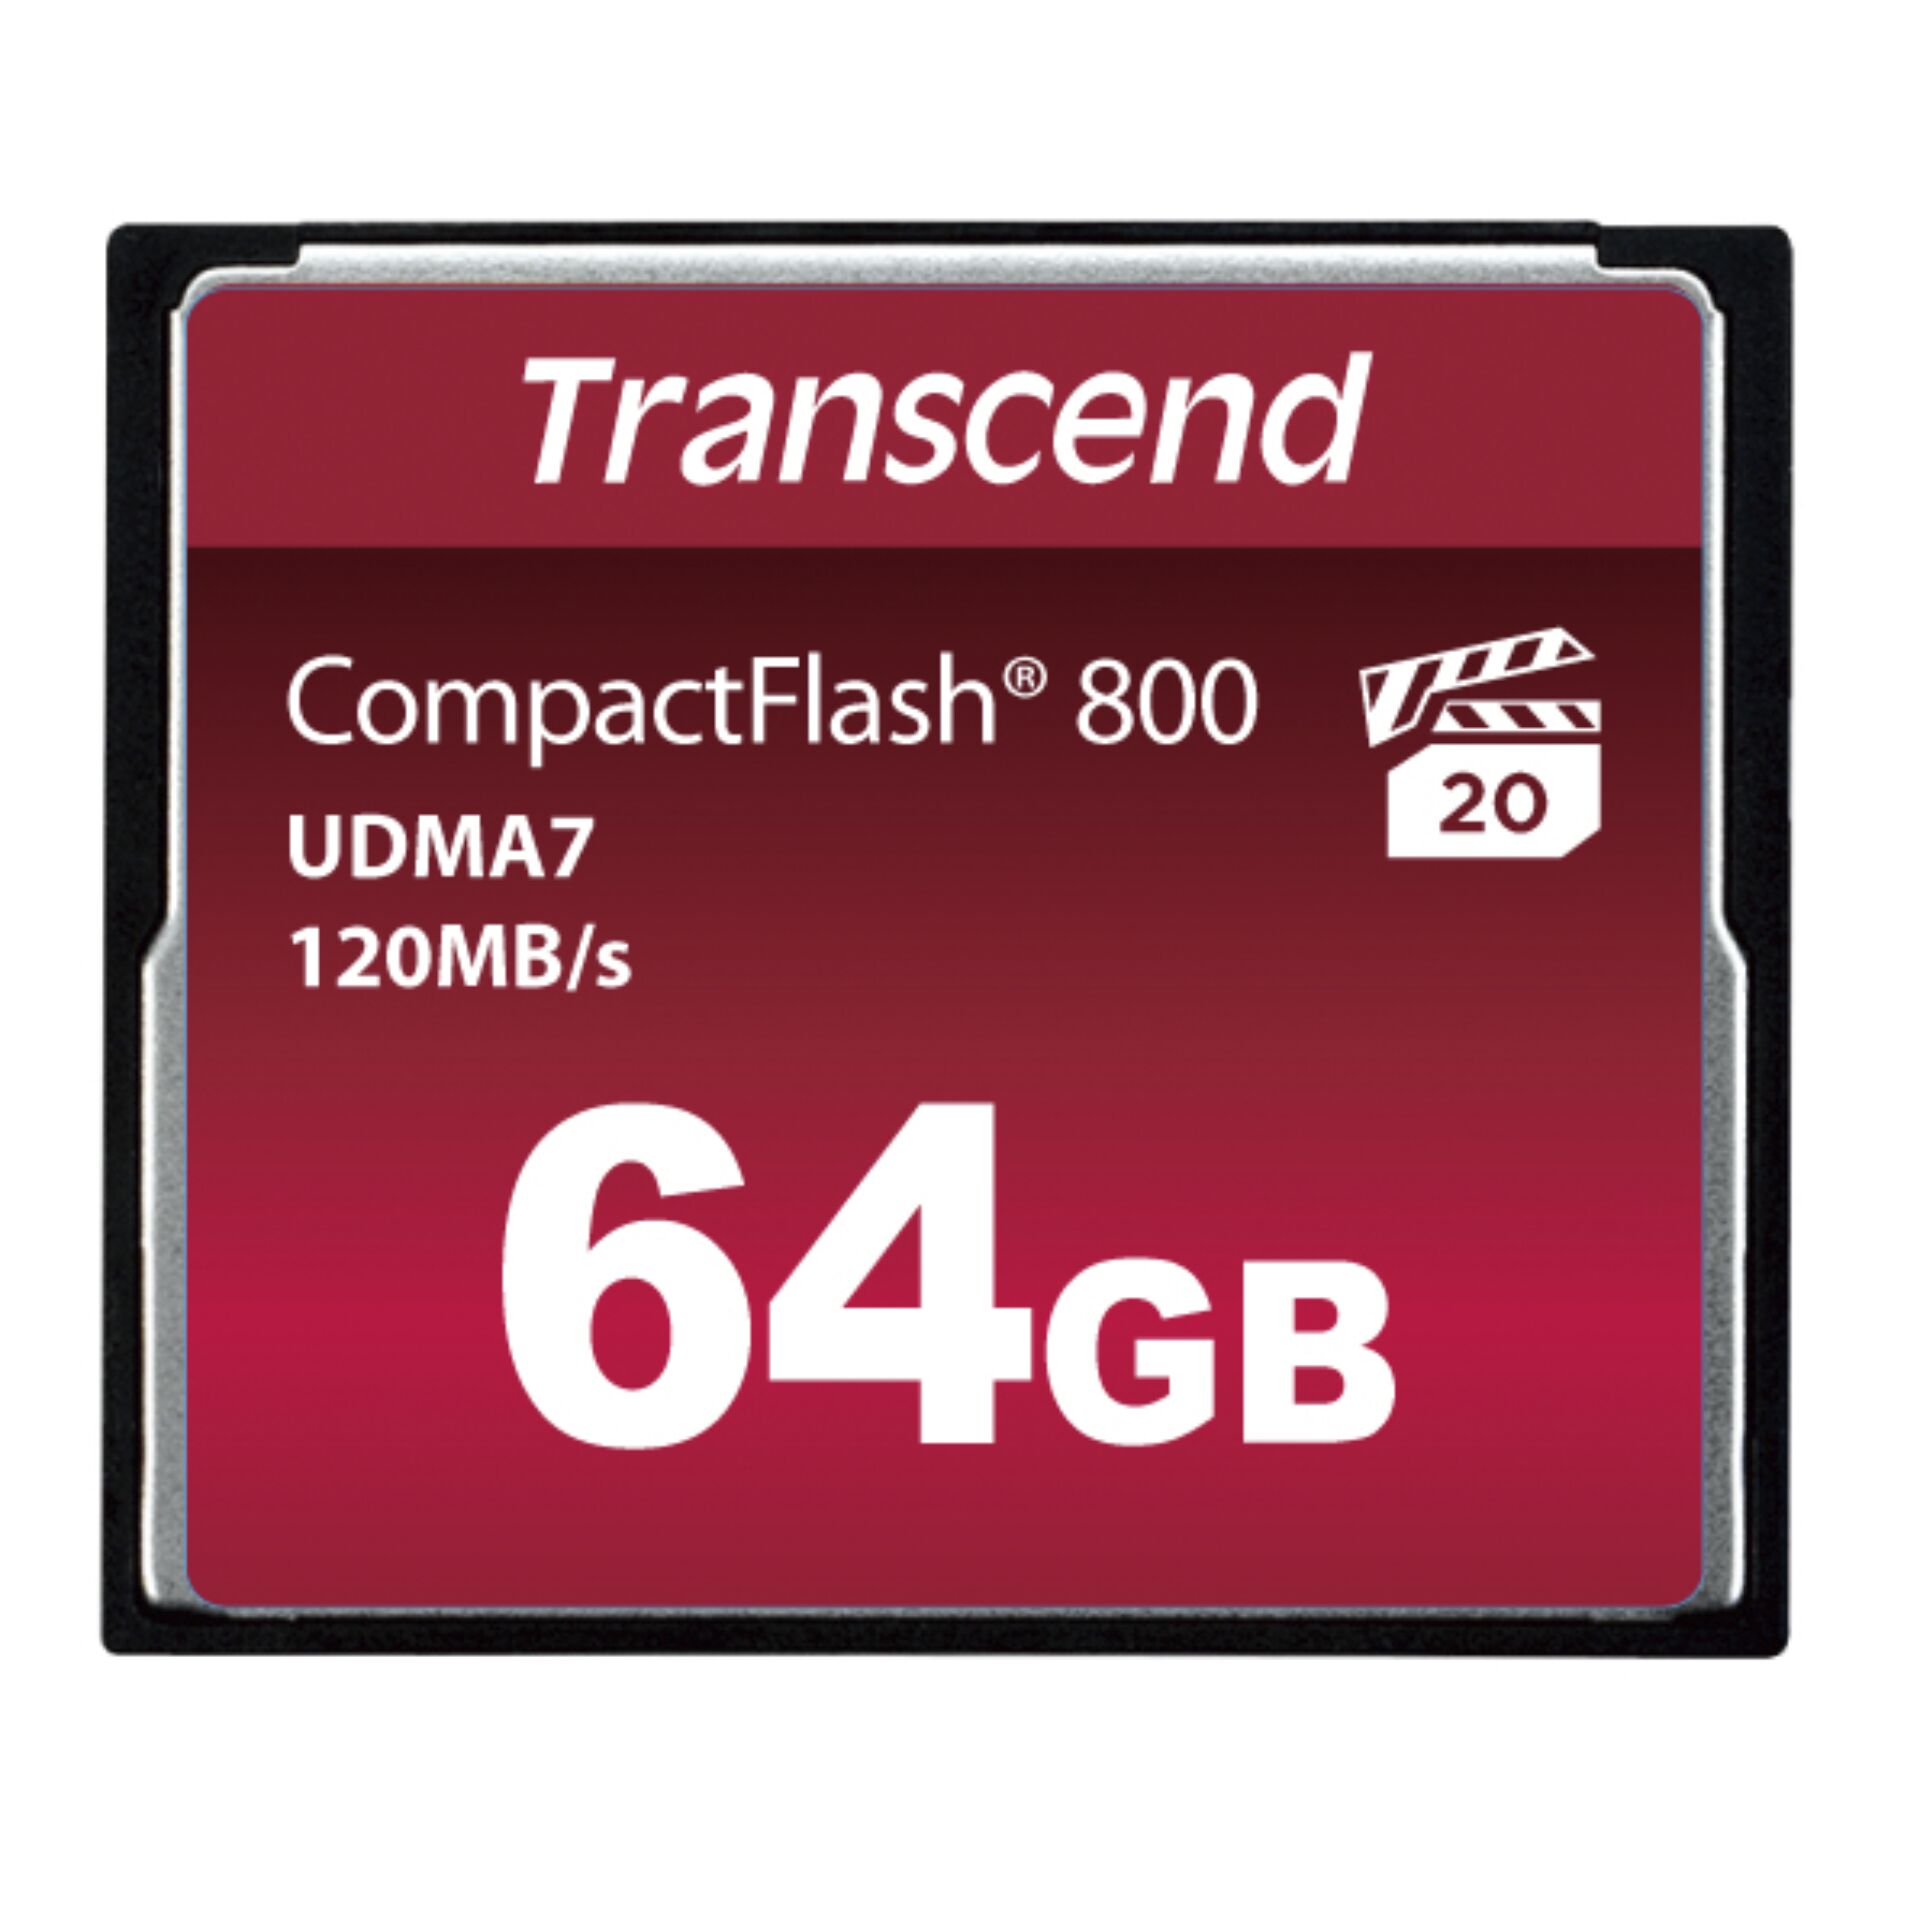 CompactFlash 64GB Transcend Card (CF) 800x 